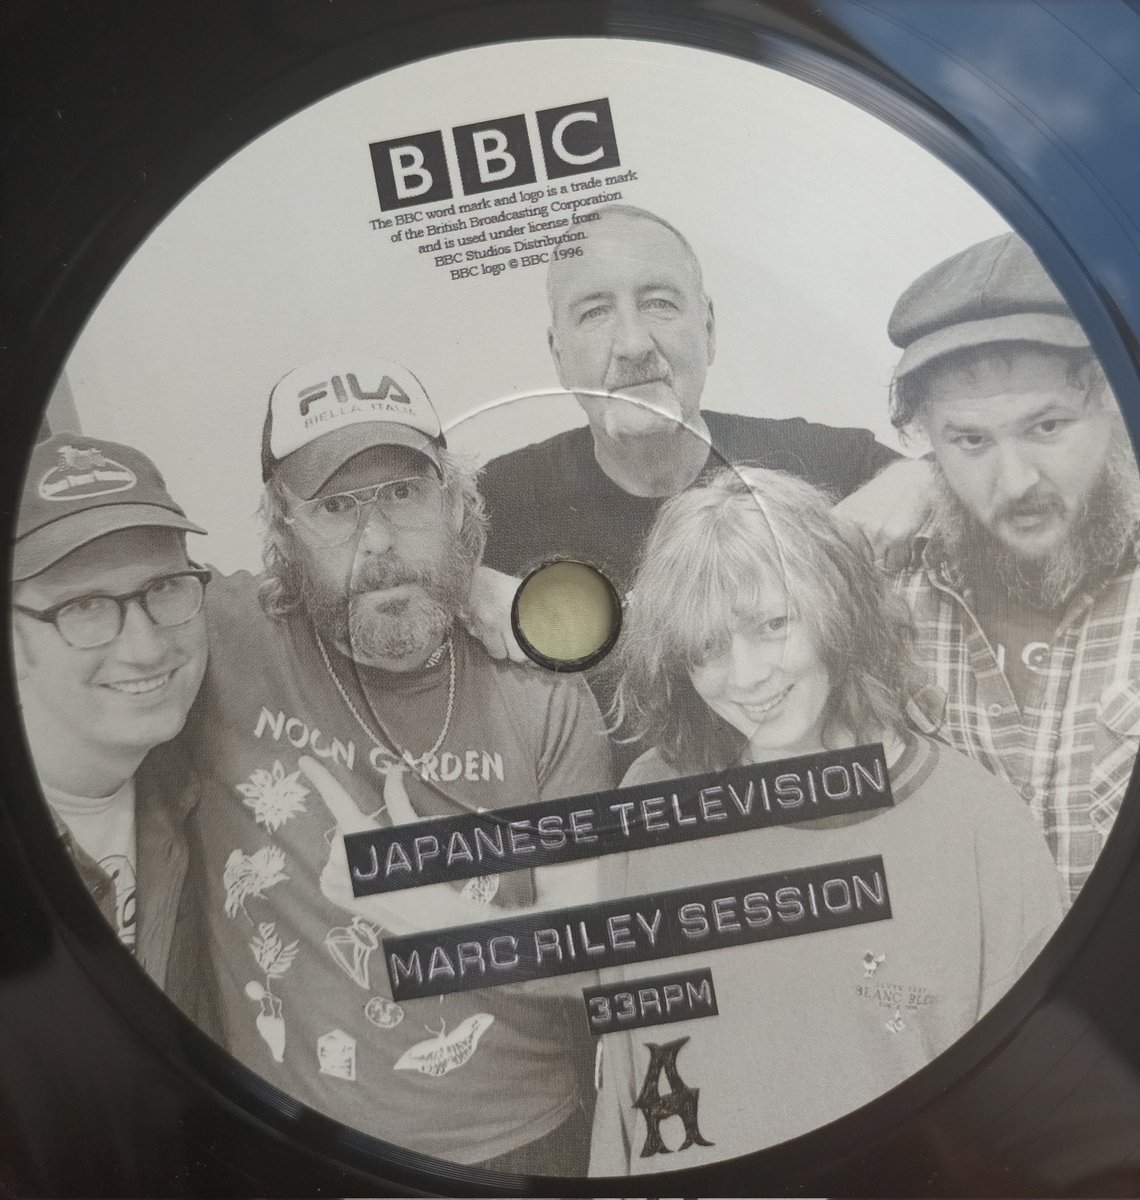 Nice bit of post today > BBC Live Session single from JTV 🎶🚀🛸🚀🎶 @JapaneseTVband @marcrileydj